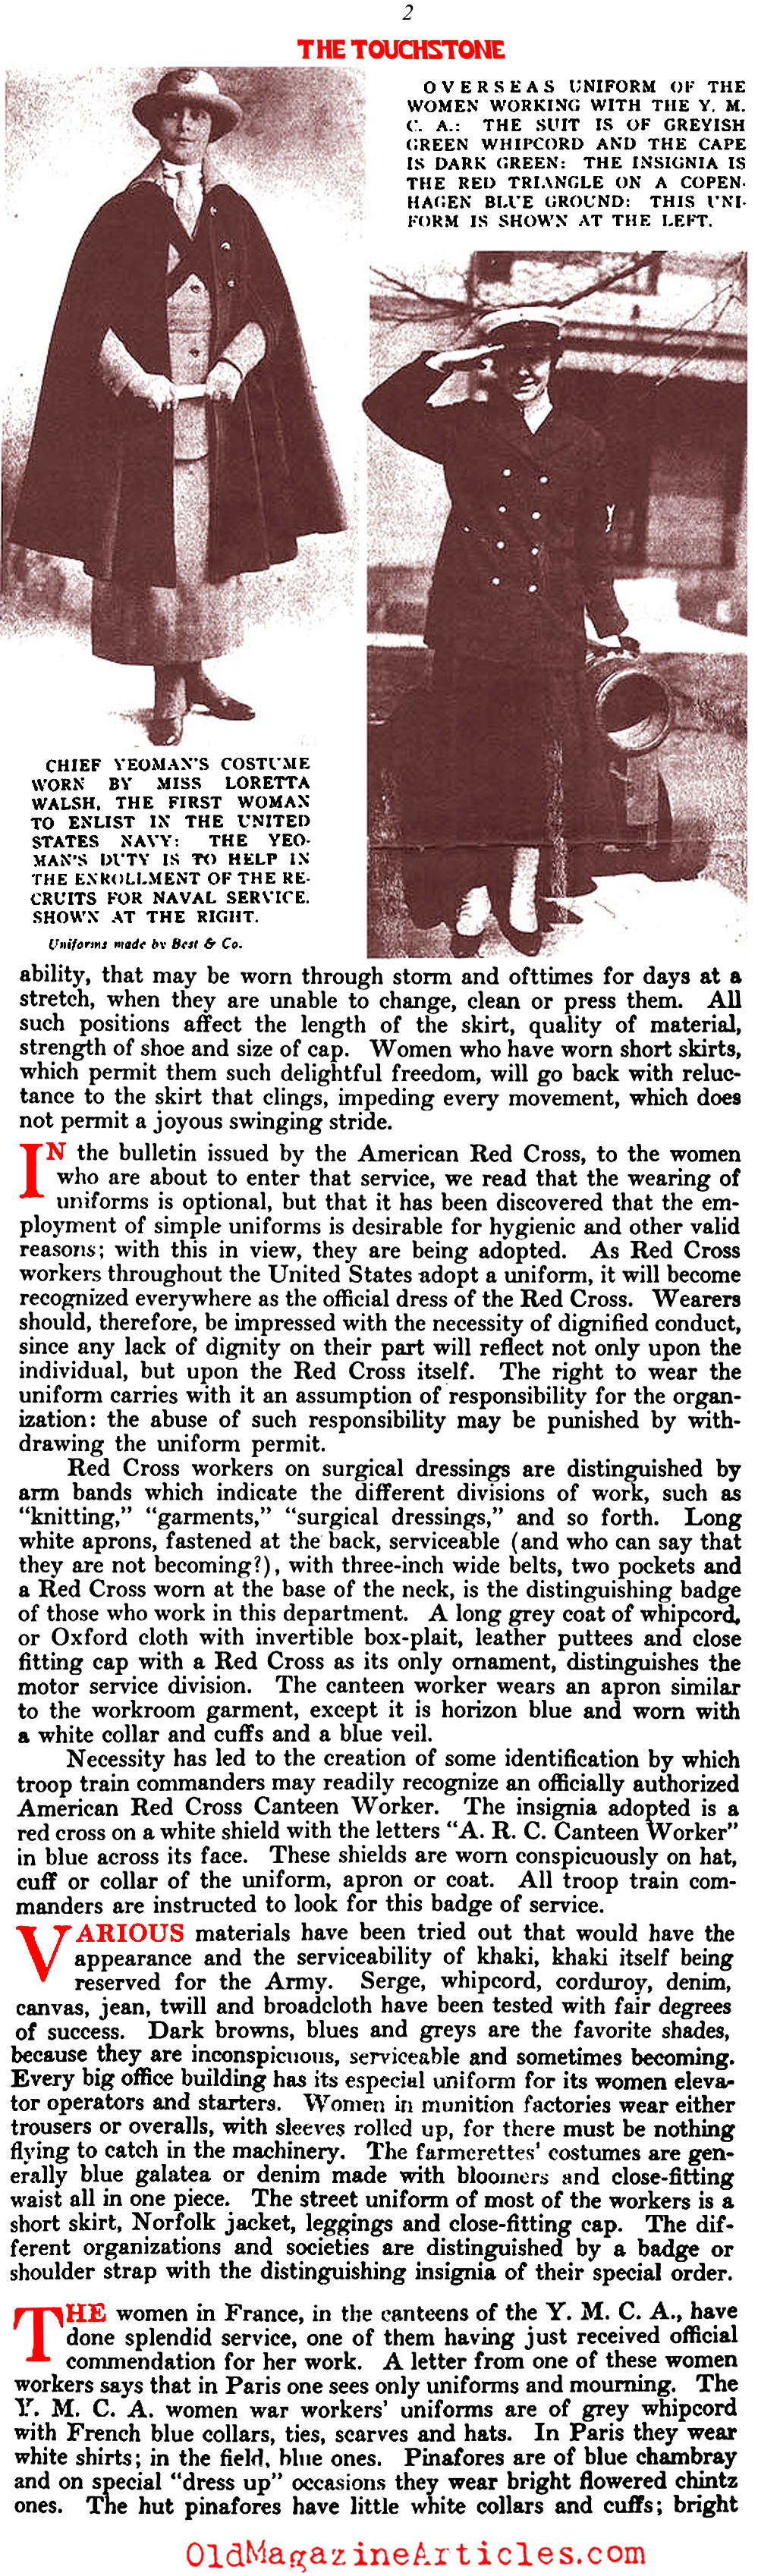 The Uniforms of Women War Workers (Touchstone Magazine, 1918)